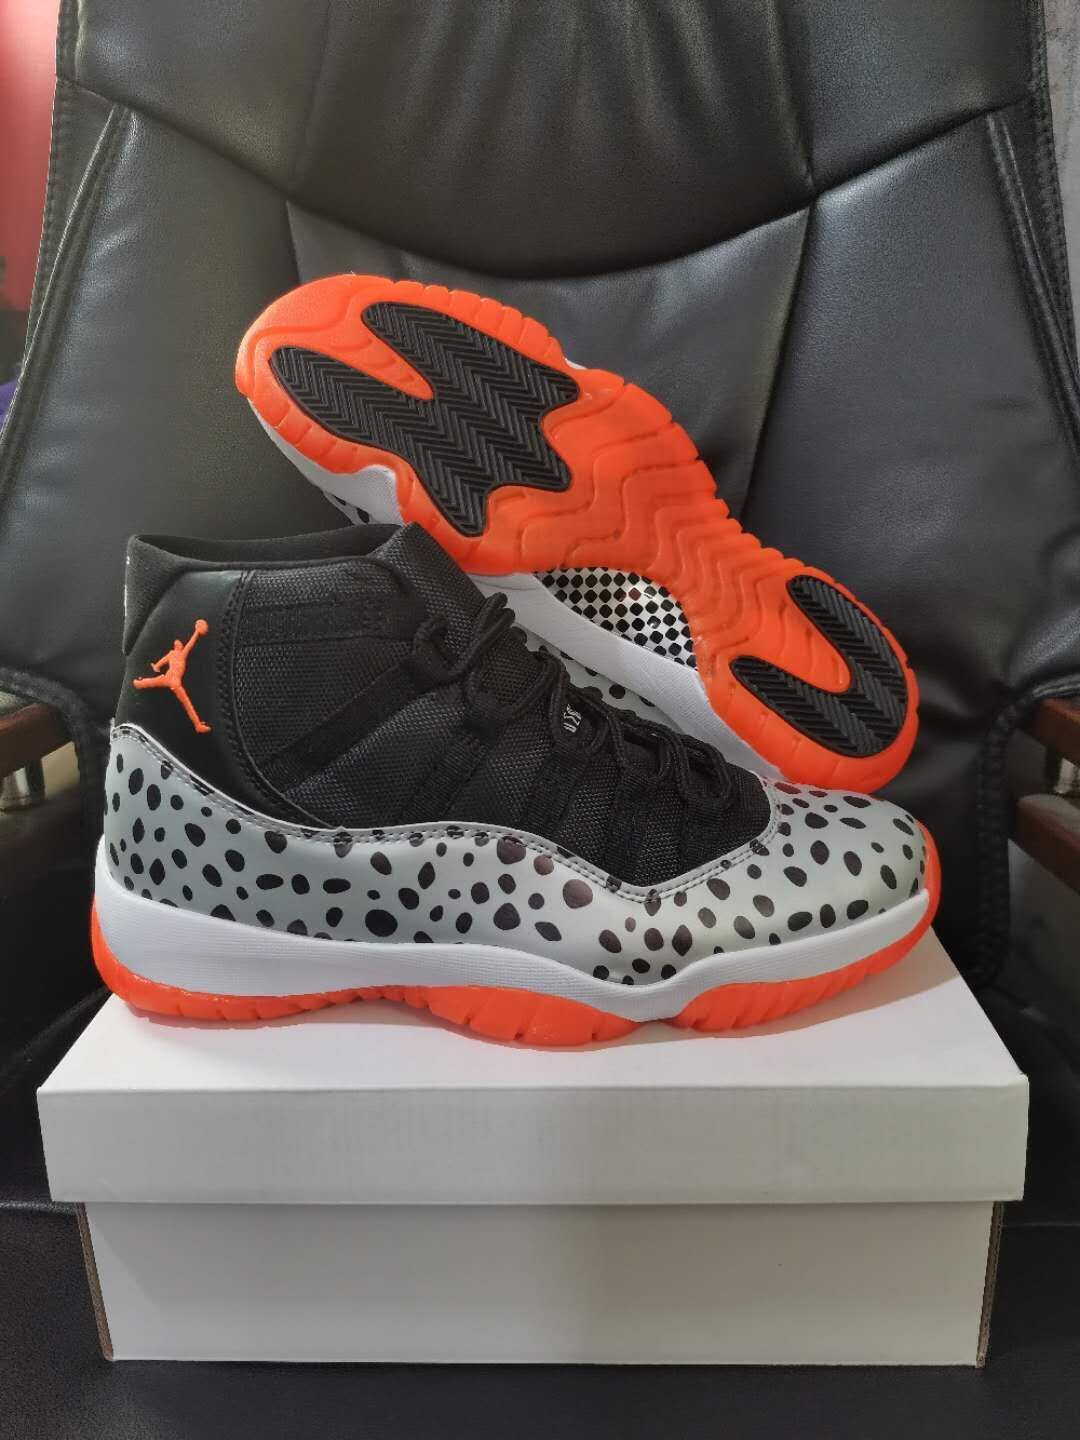 2020 Air Jordan 11 Leopard Print Black Orange Shoes